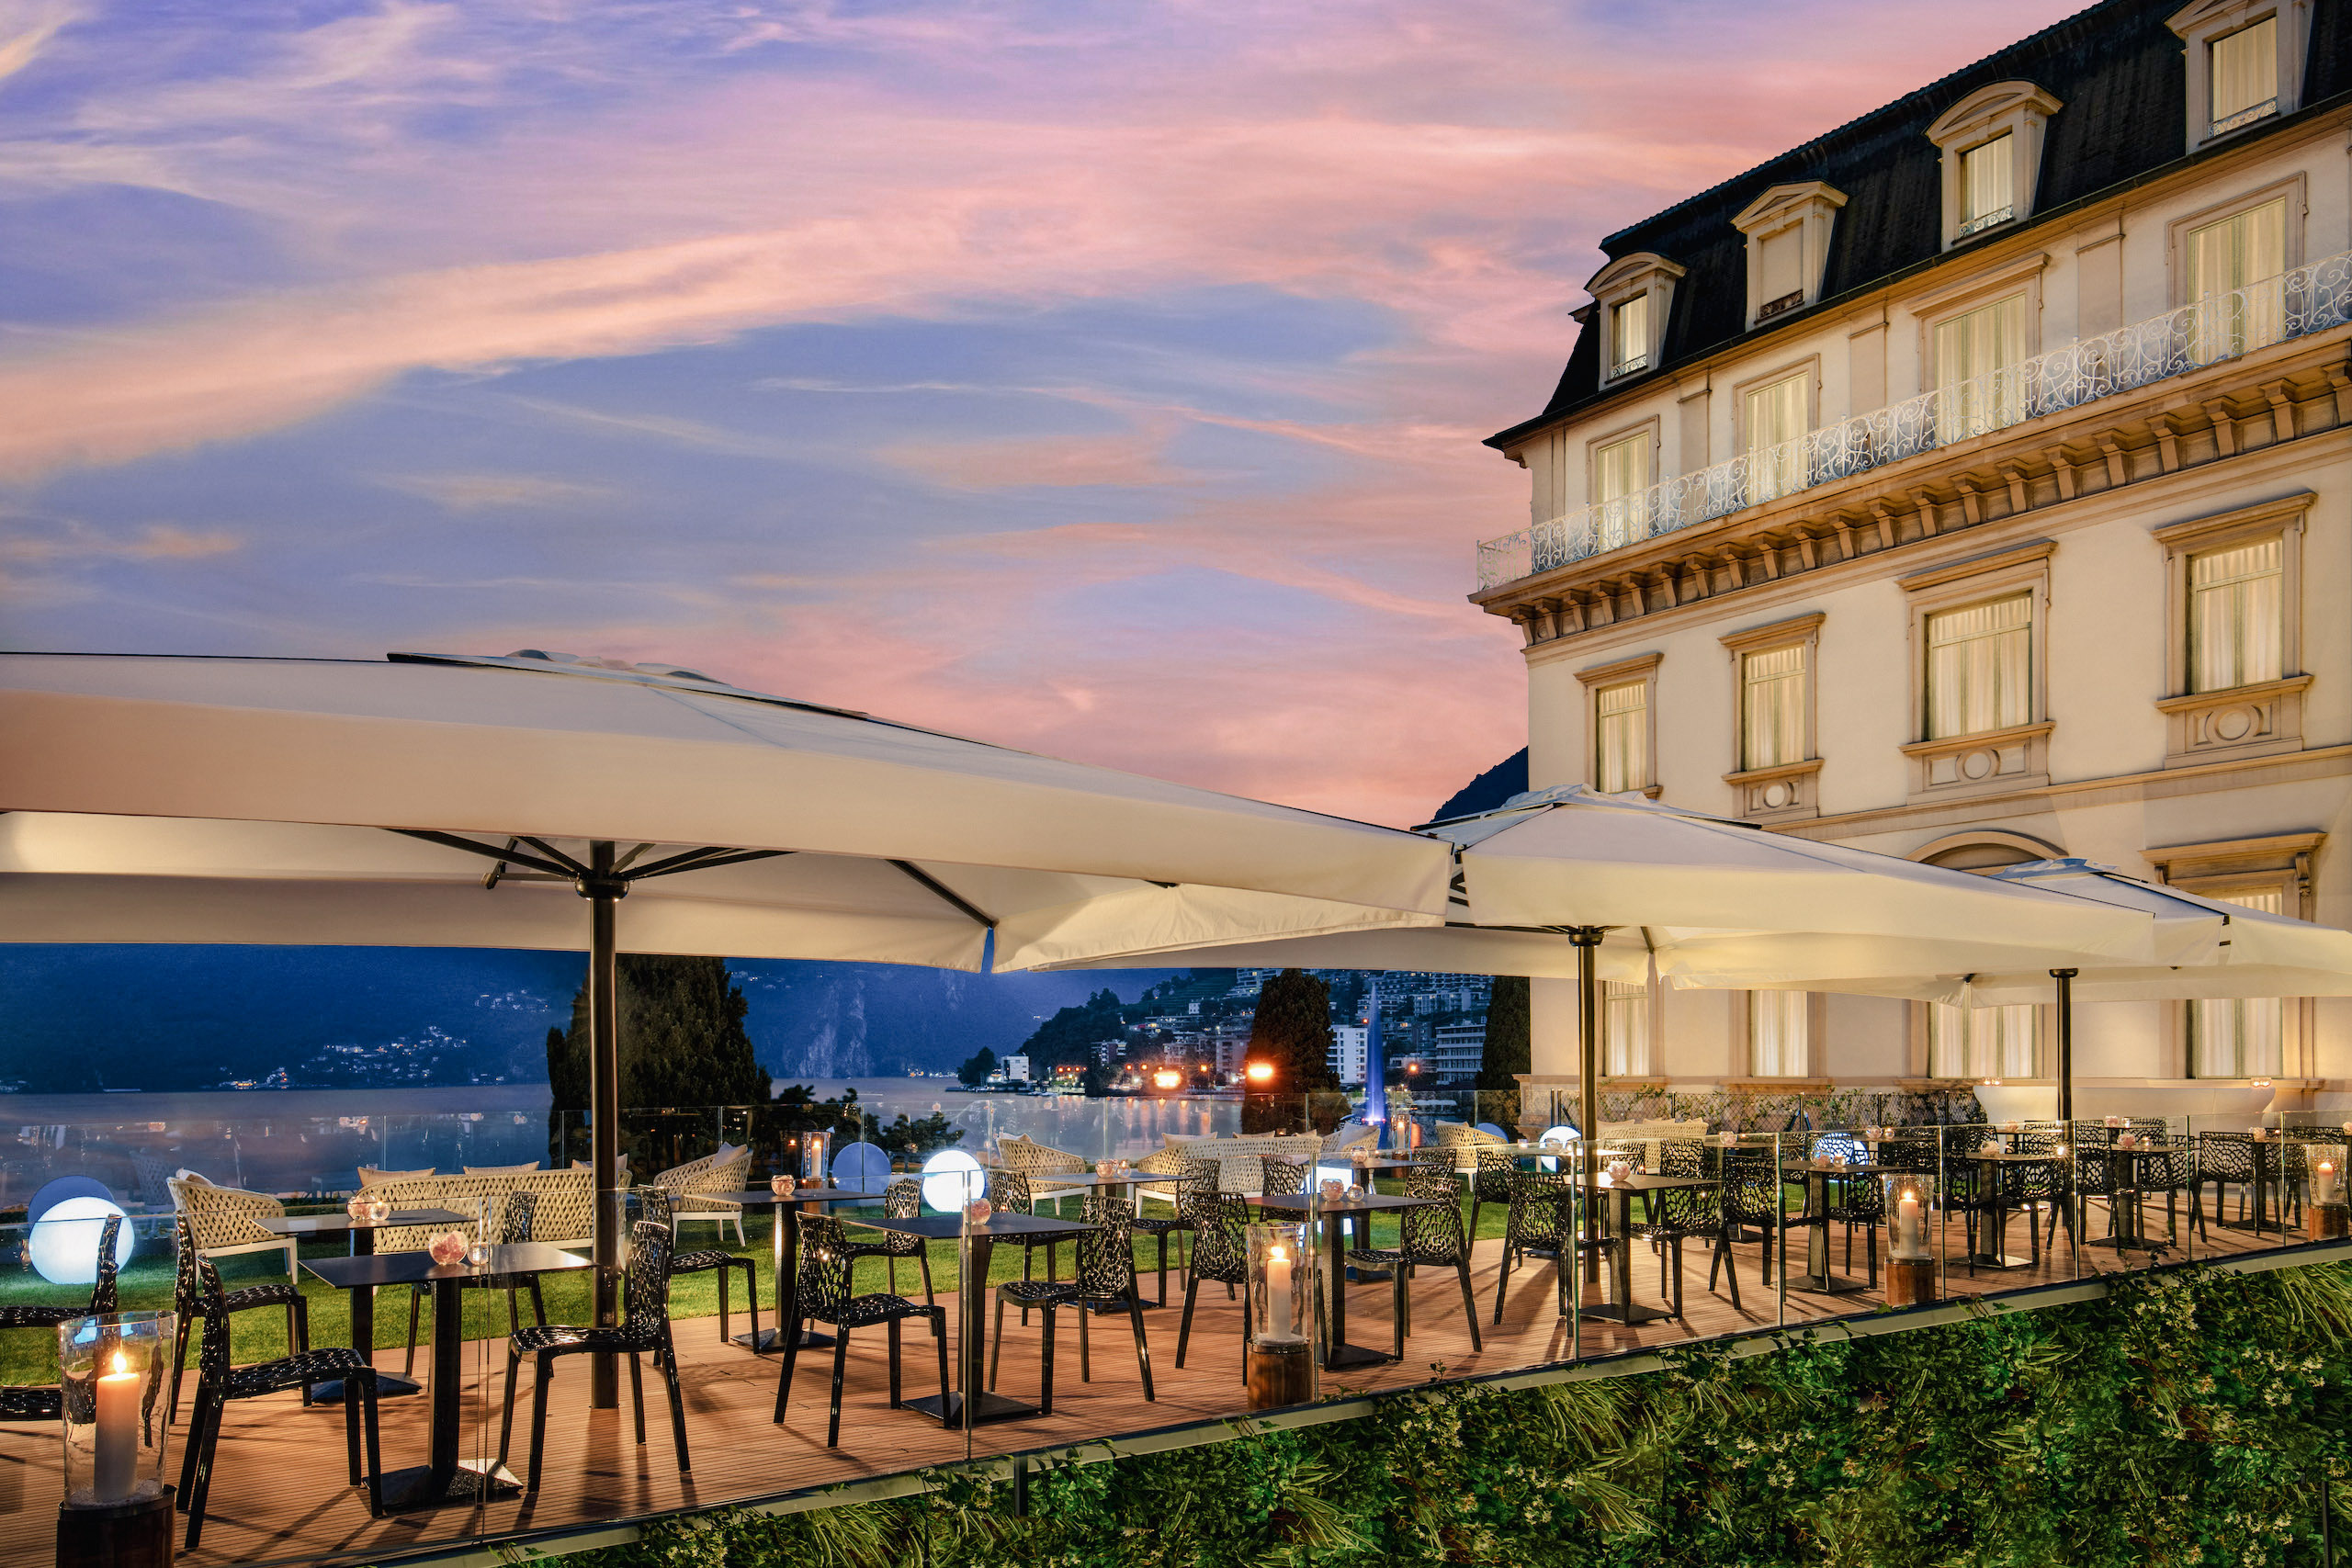 Splendide Royal Hotel Lugano La Piazzetta Lounge